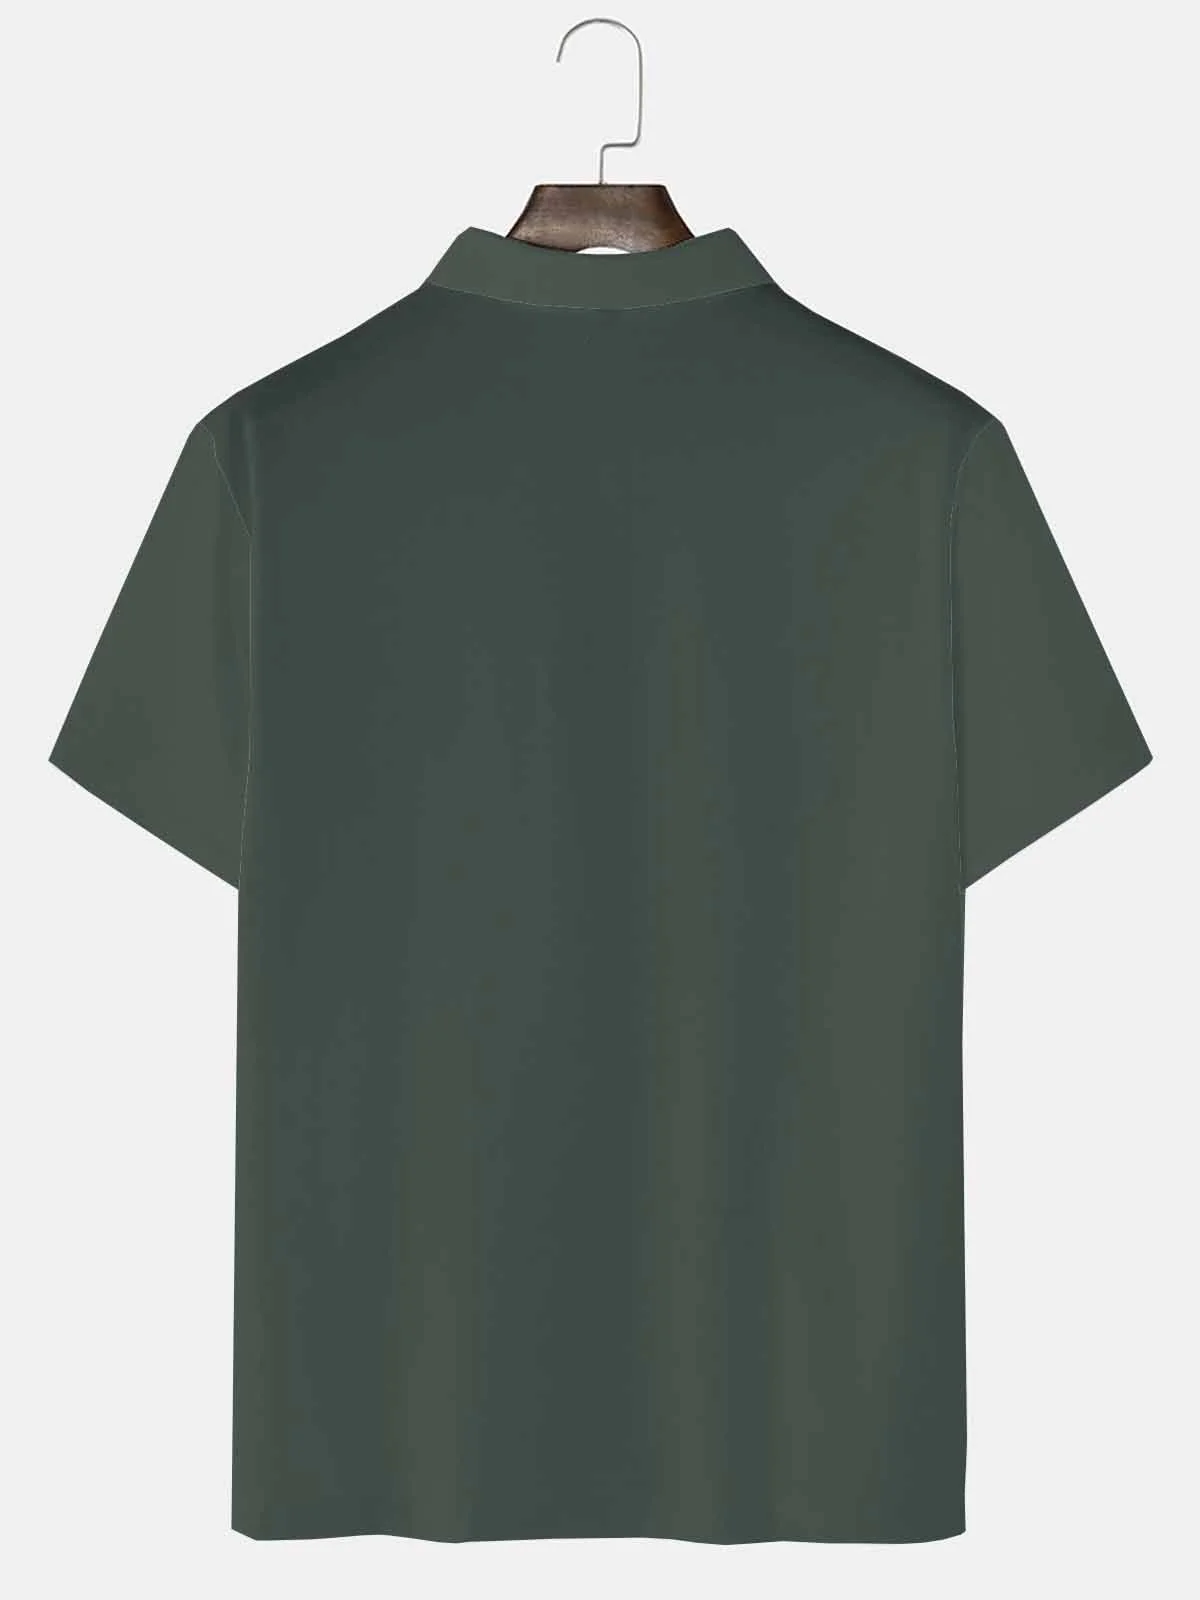 Royaura Letter Print Basic Men's Button Polo Shirt